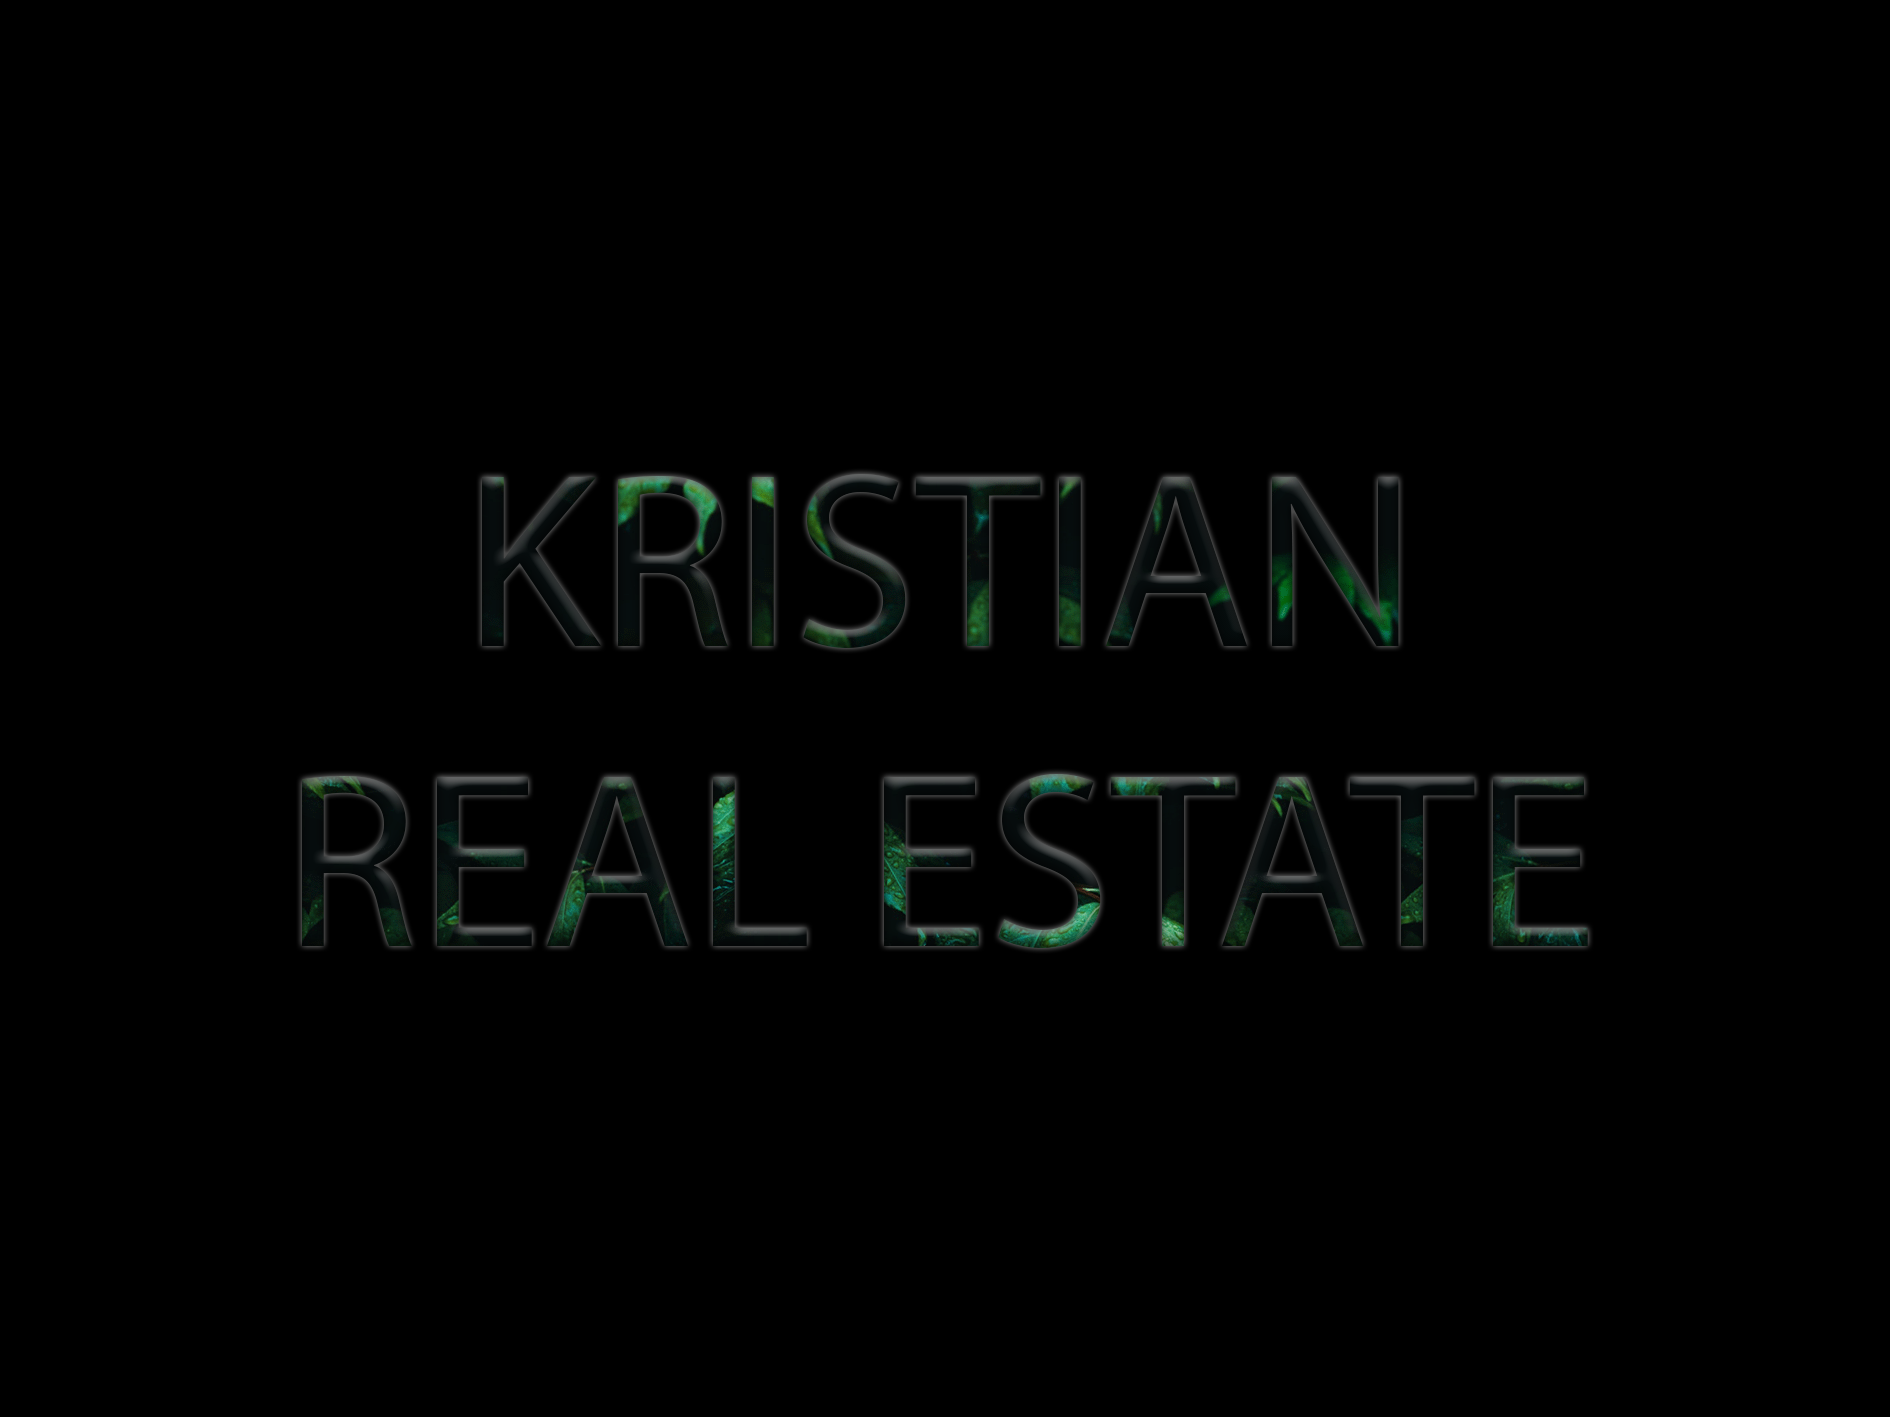 Kristian real estate